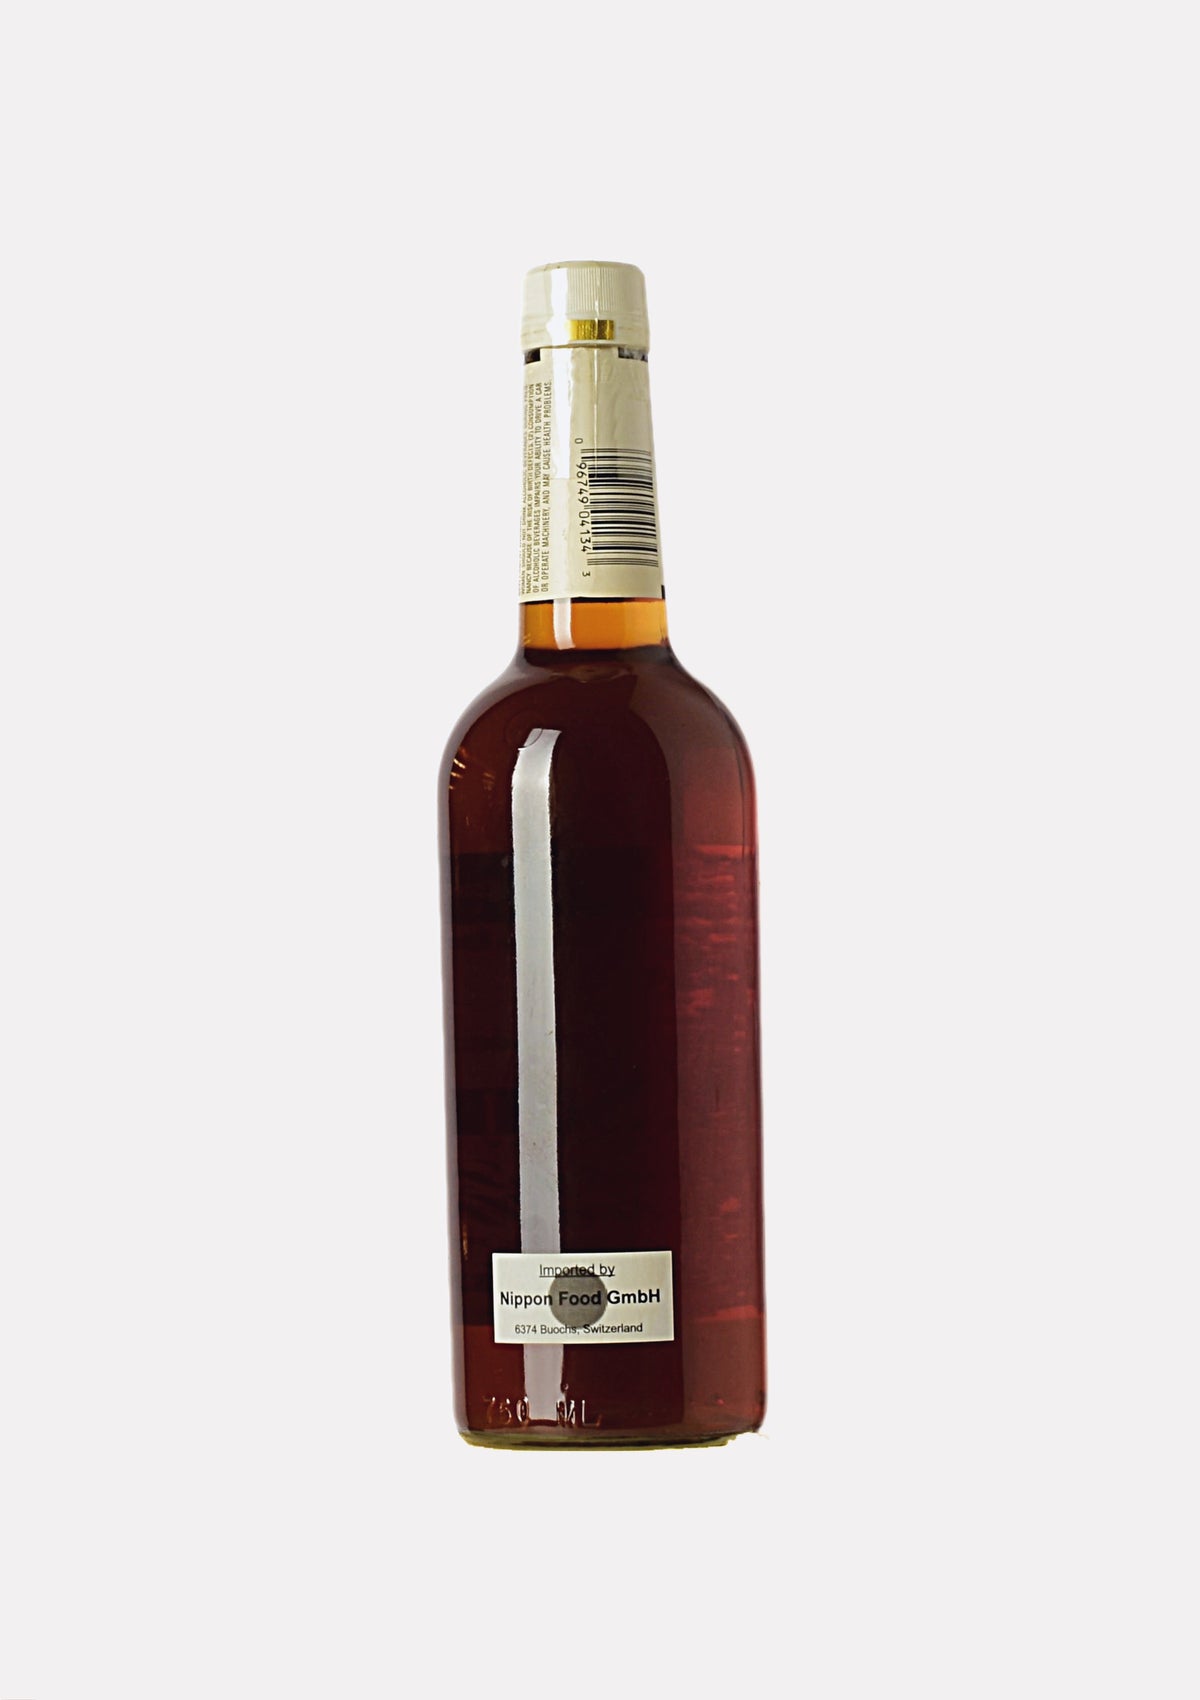 T.W. Samuels Kentucky Straight Bourbon Whiskey